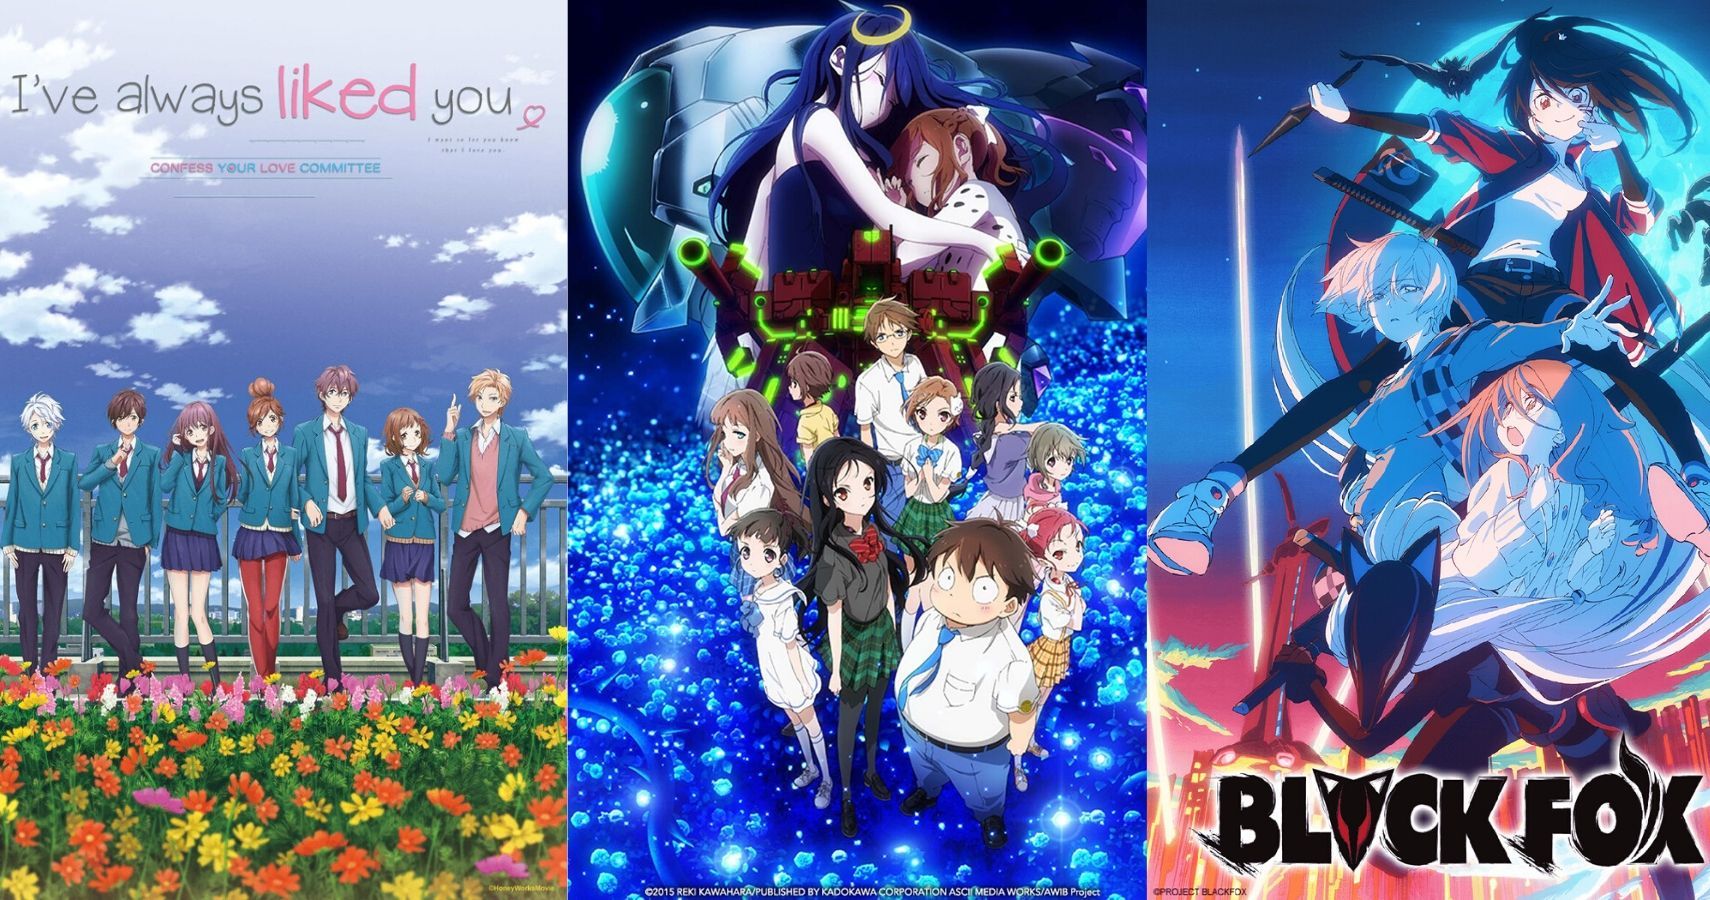 The 10 Best Anime Movies On Crunchyroll, According To IMDb